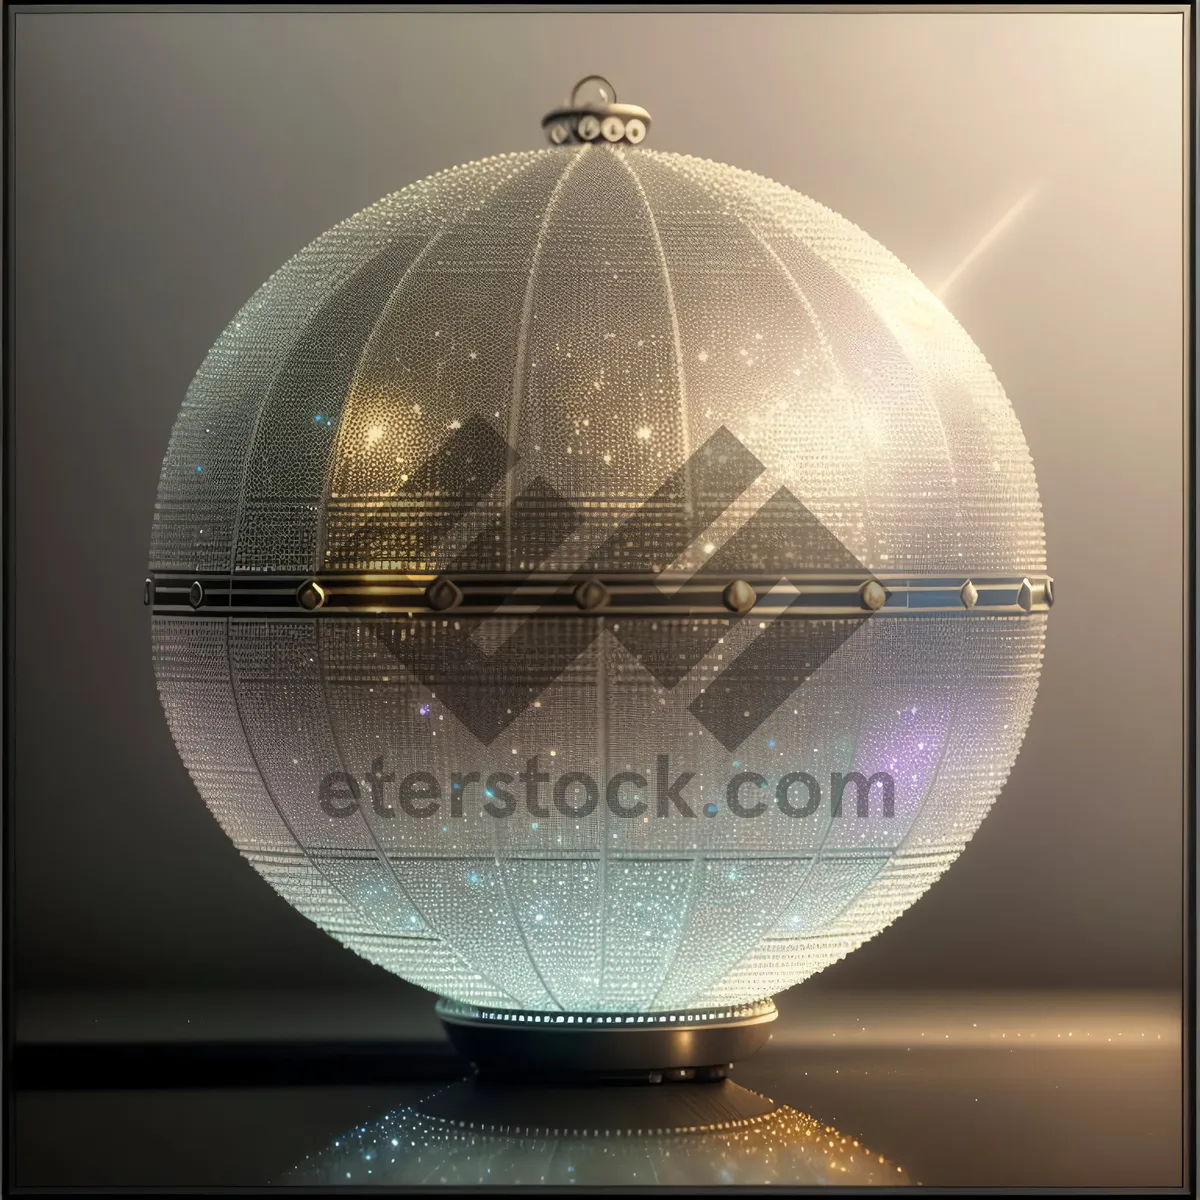 Picture of Festive Shiny Globe Ball for Winter Celebration